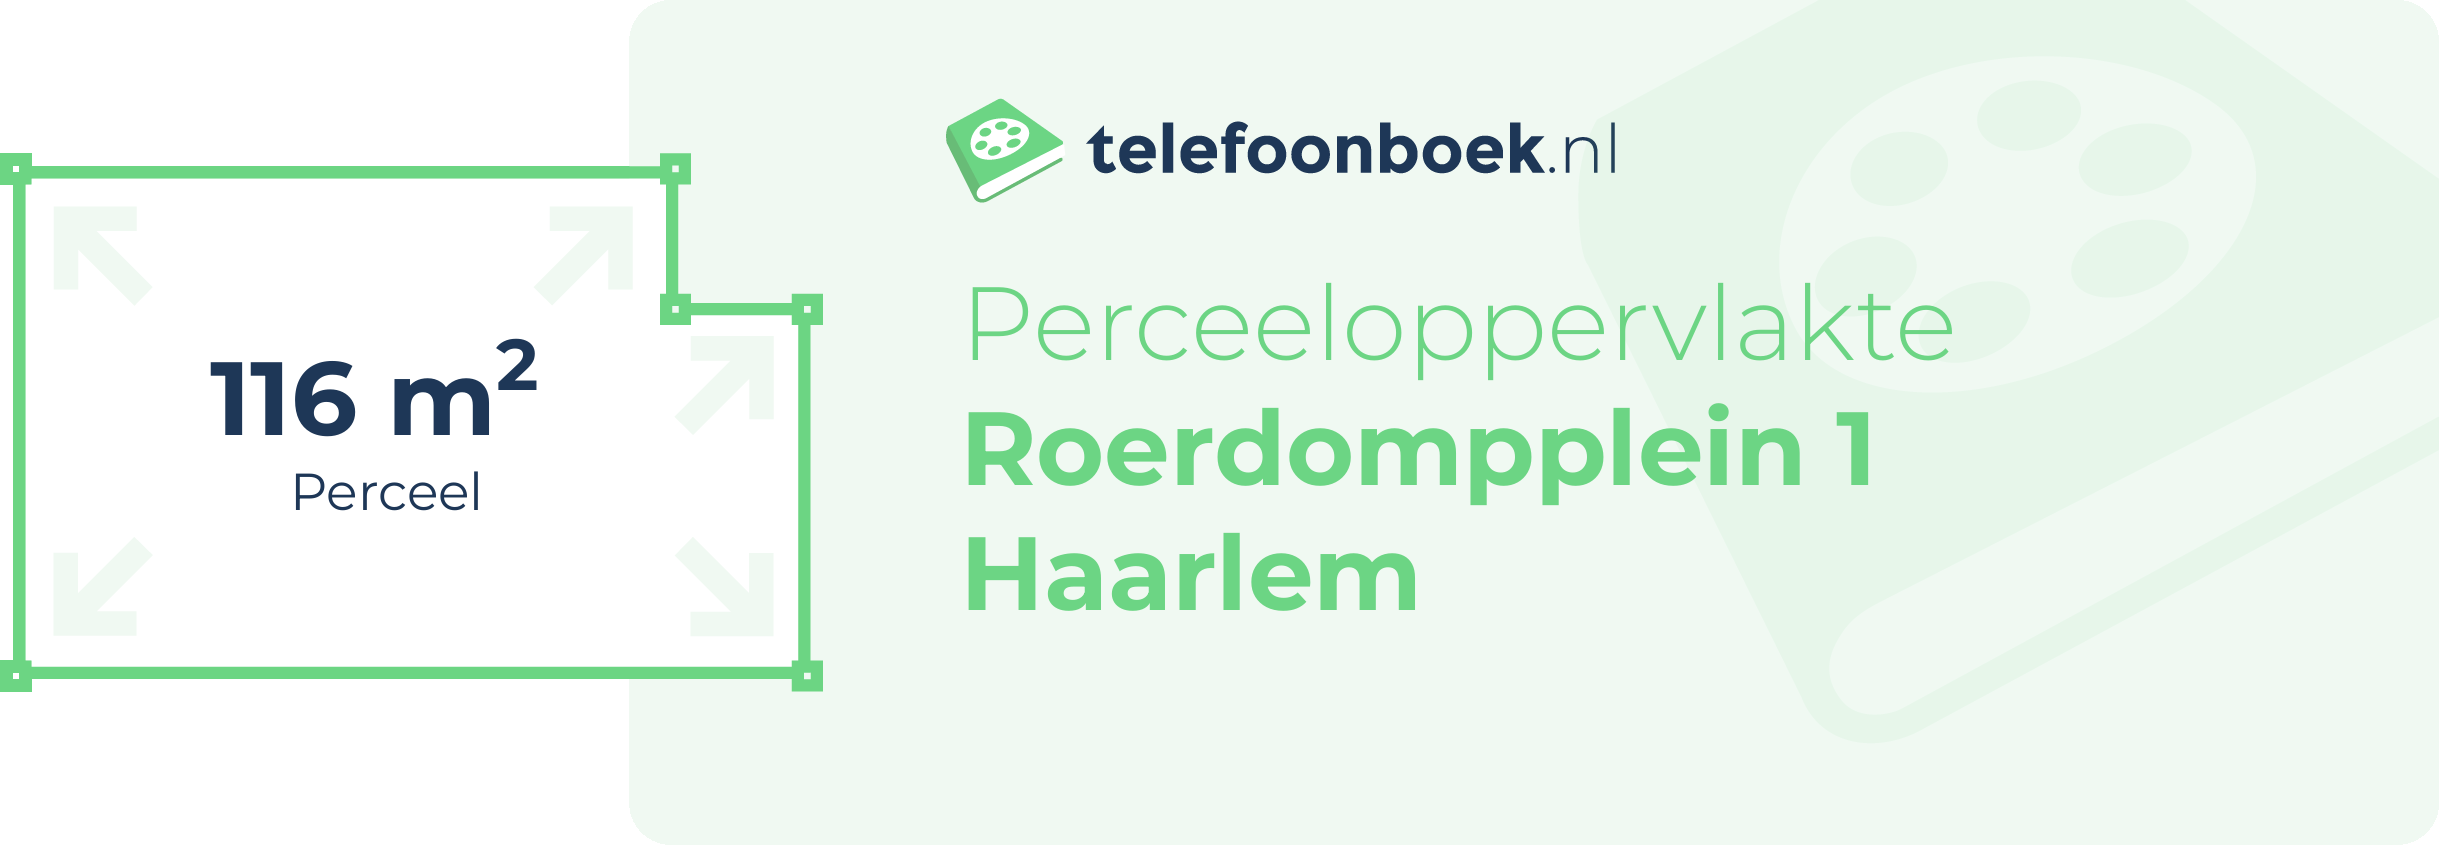 Perceeloppervlakte Roerdompplein 1 Haarlem